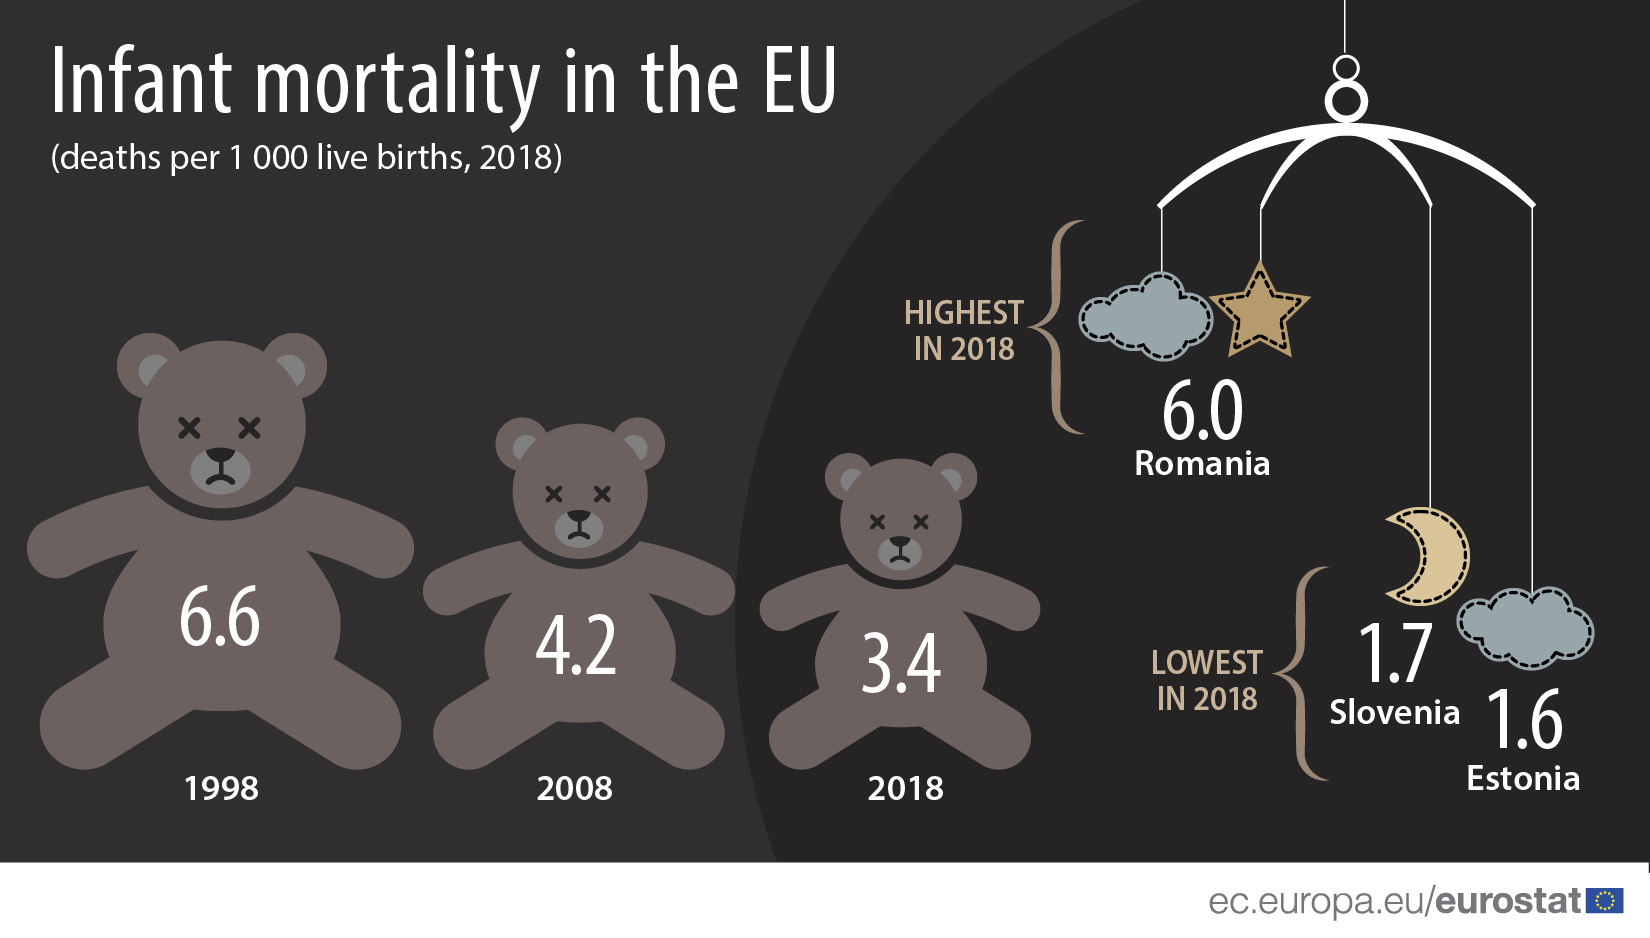 Infant mortality halved between 1998 